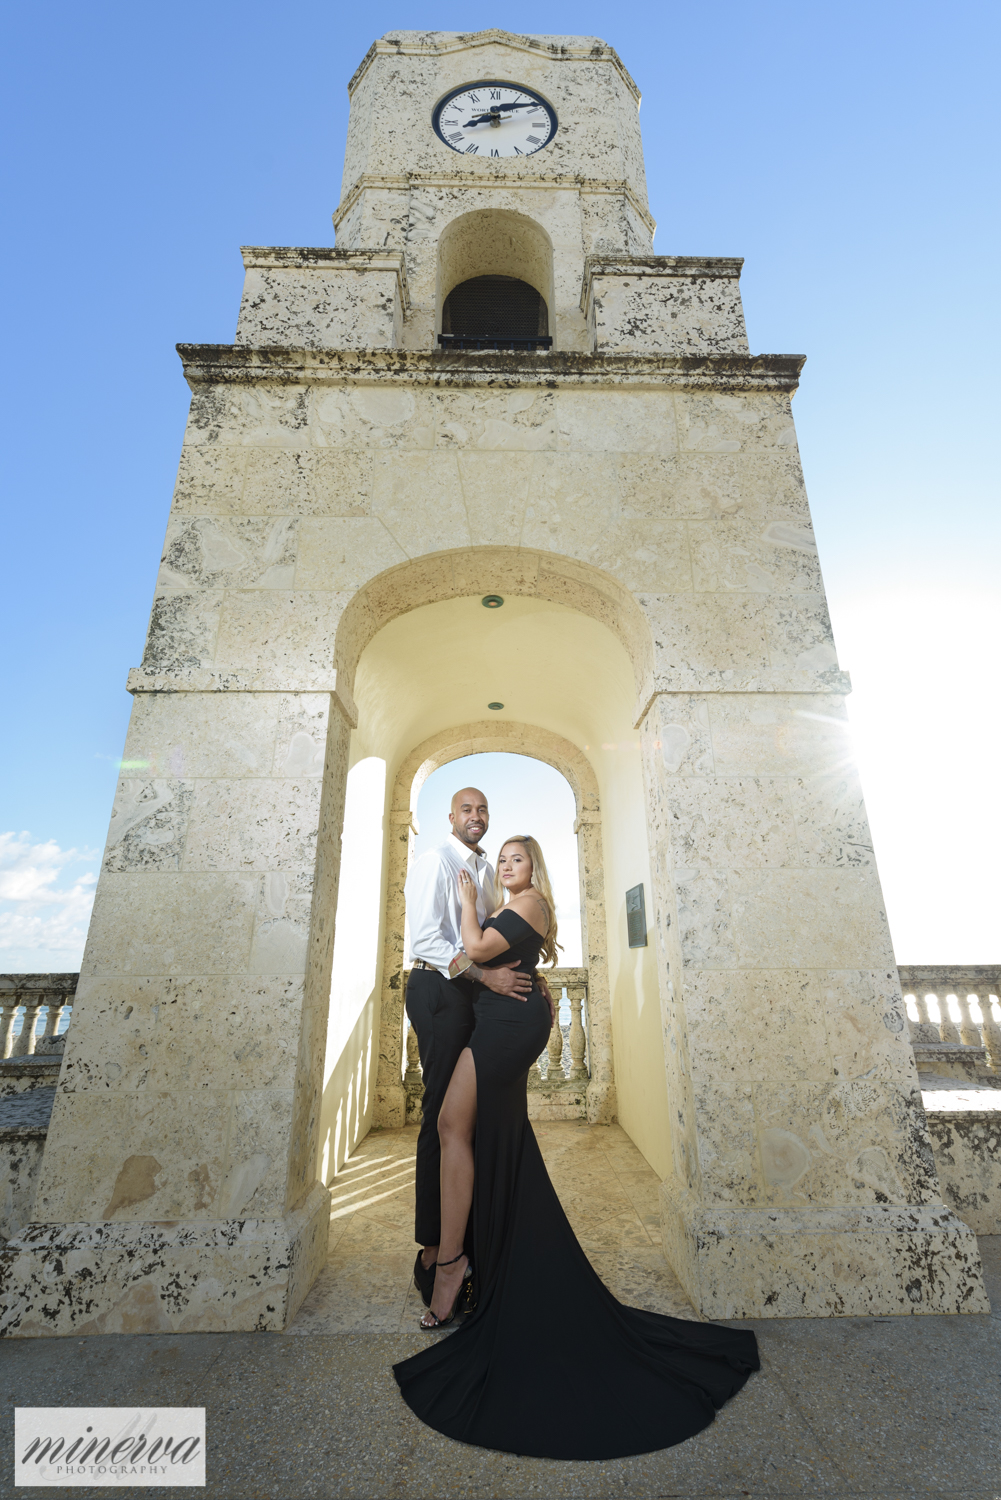 018_engagement-portrait-beach_wedding-photography_worth-ave-clocktower_west-palm-beach_south-florida_orlando_photographer